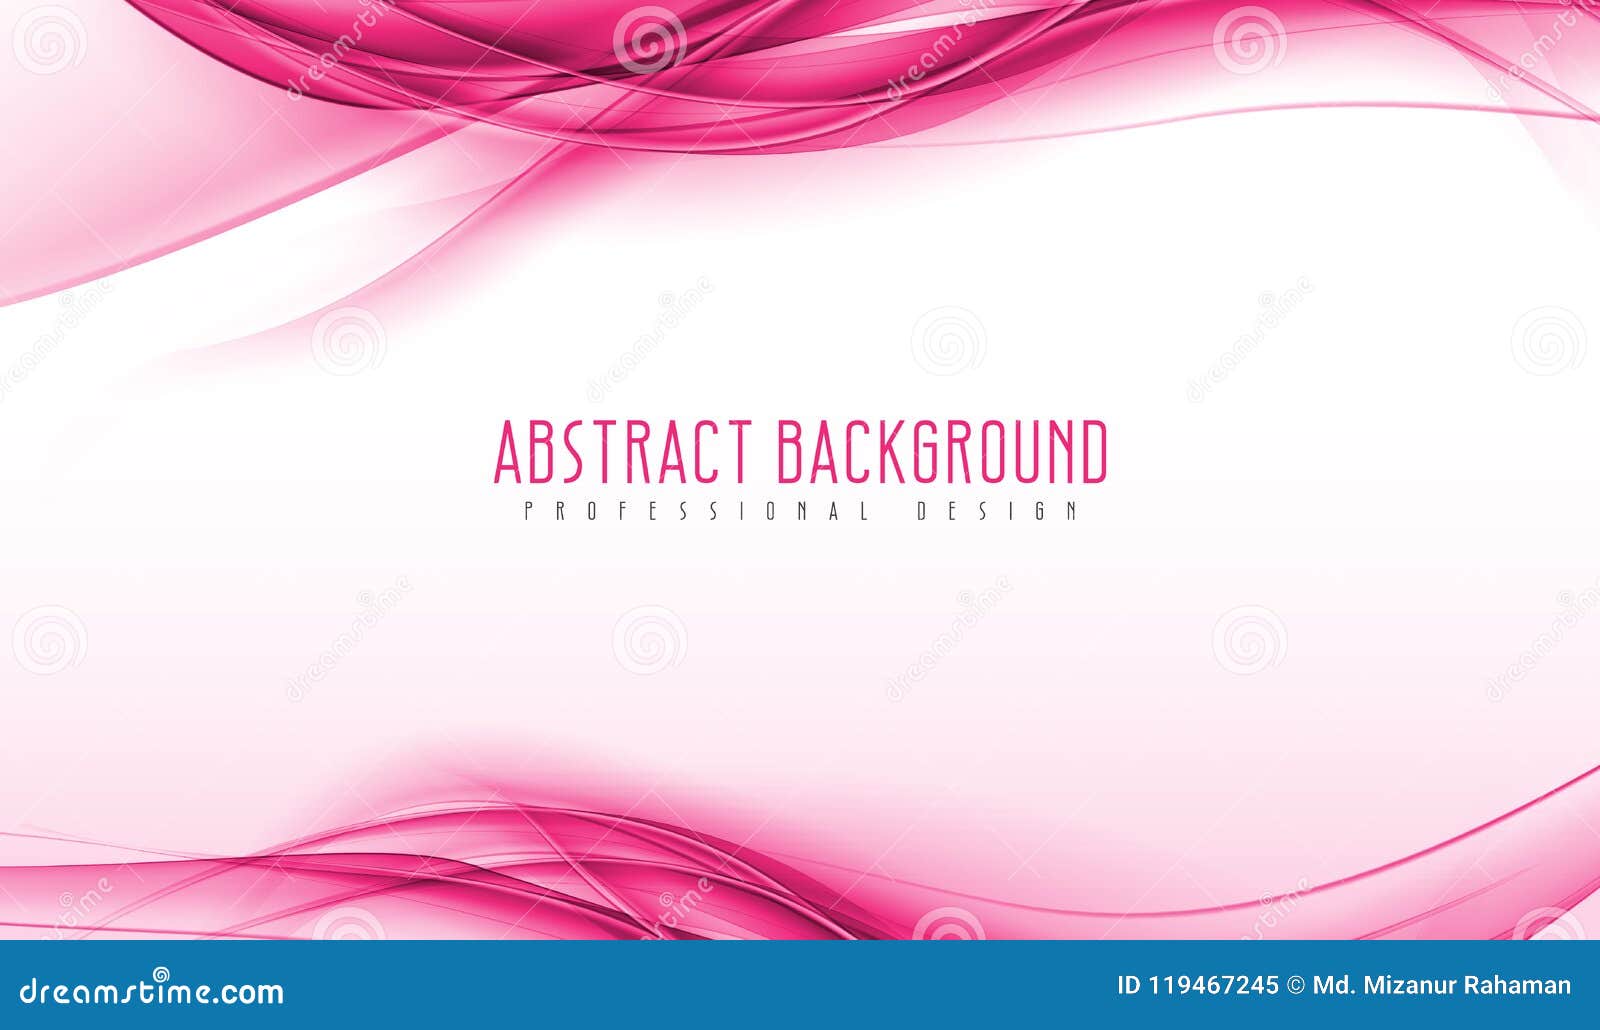 abstract modern pink wavy smoke background. amazing geometric  s with eps10.